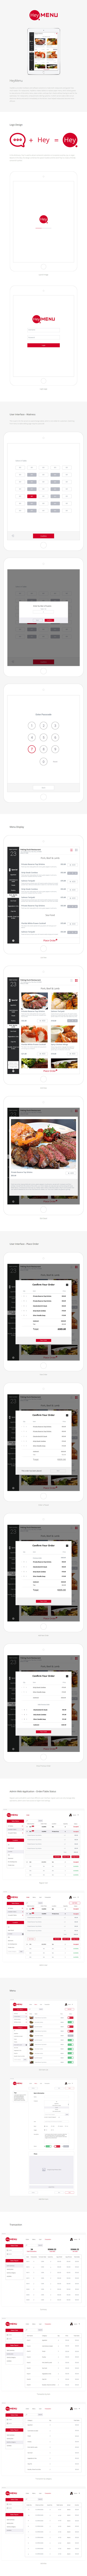 menu restaurant Website app tablet clean minimalist red